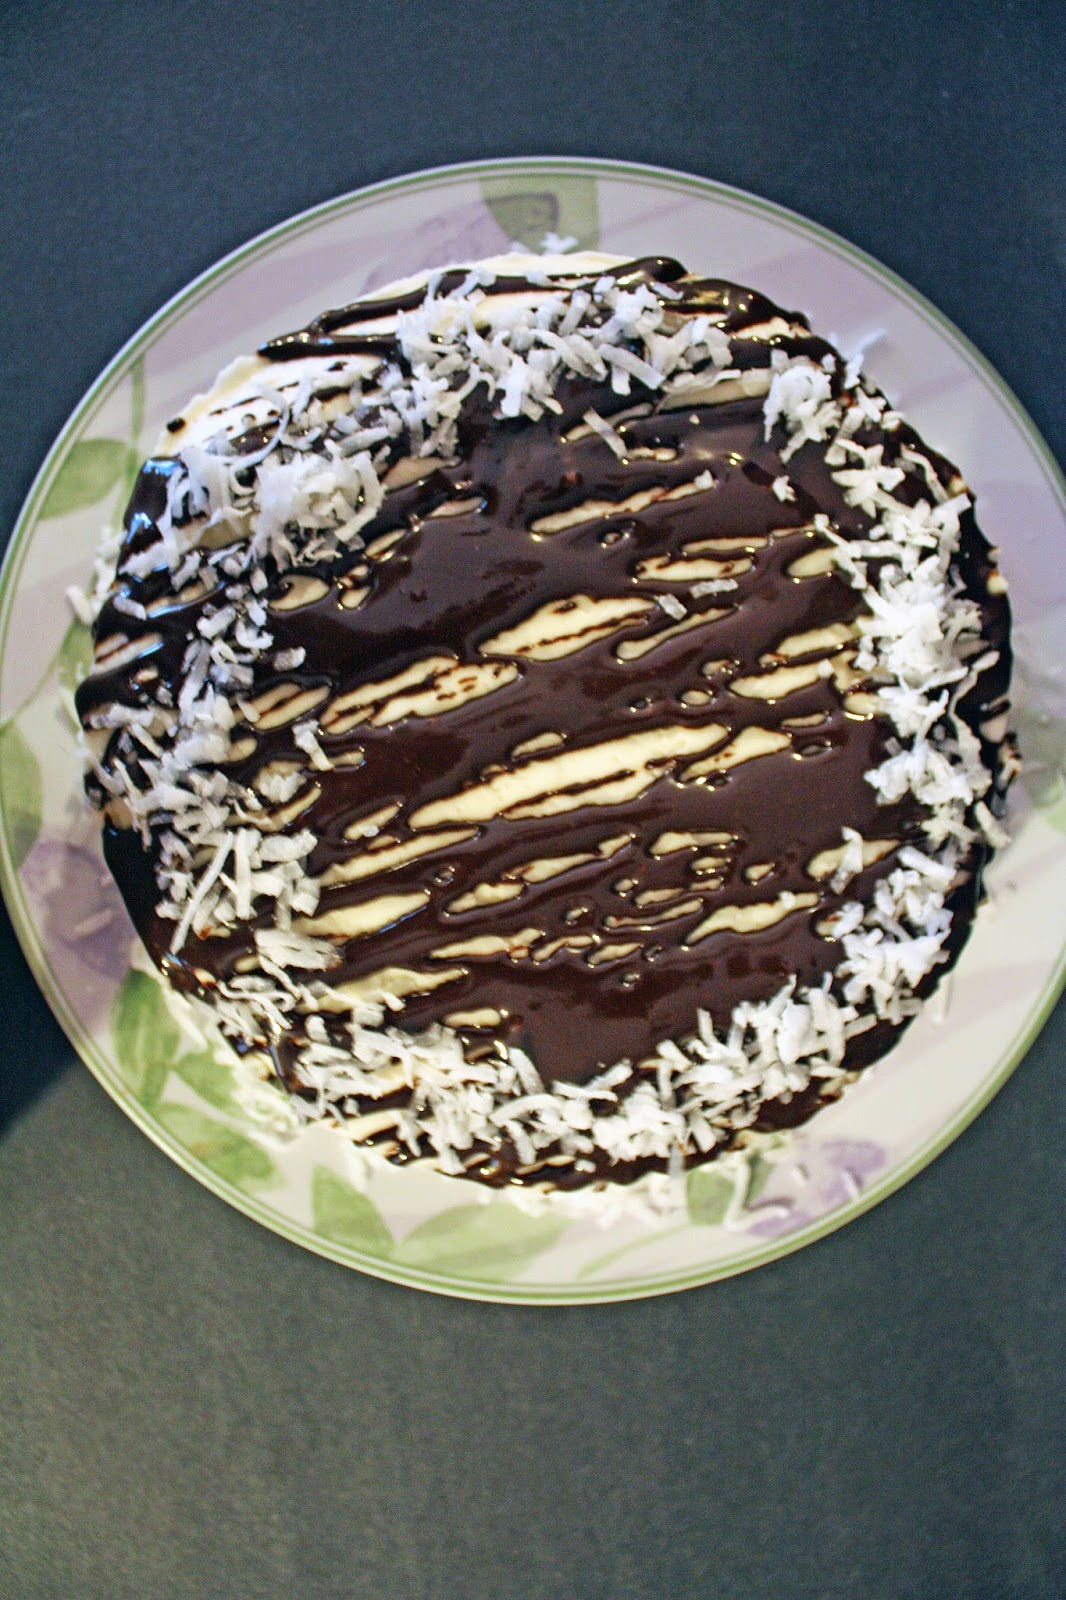 vegan chocolate layer cake with chili and coconut